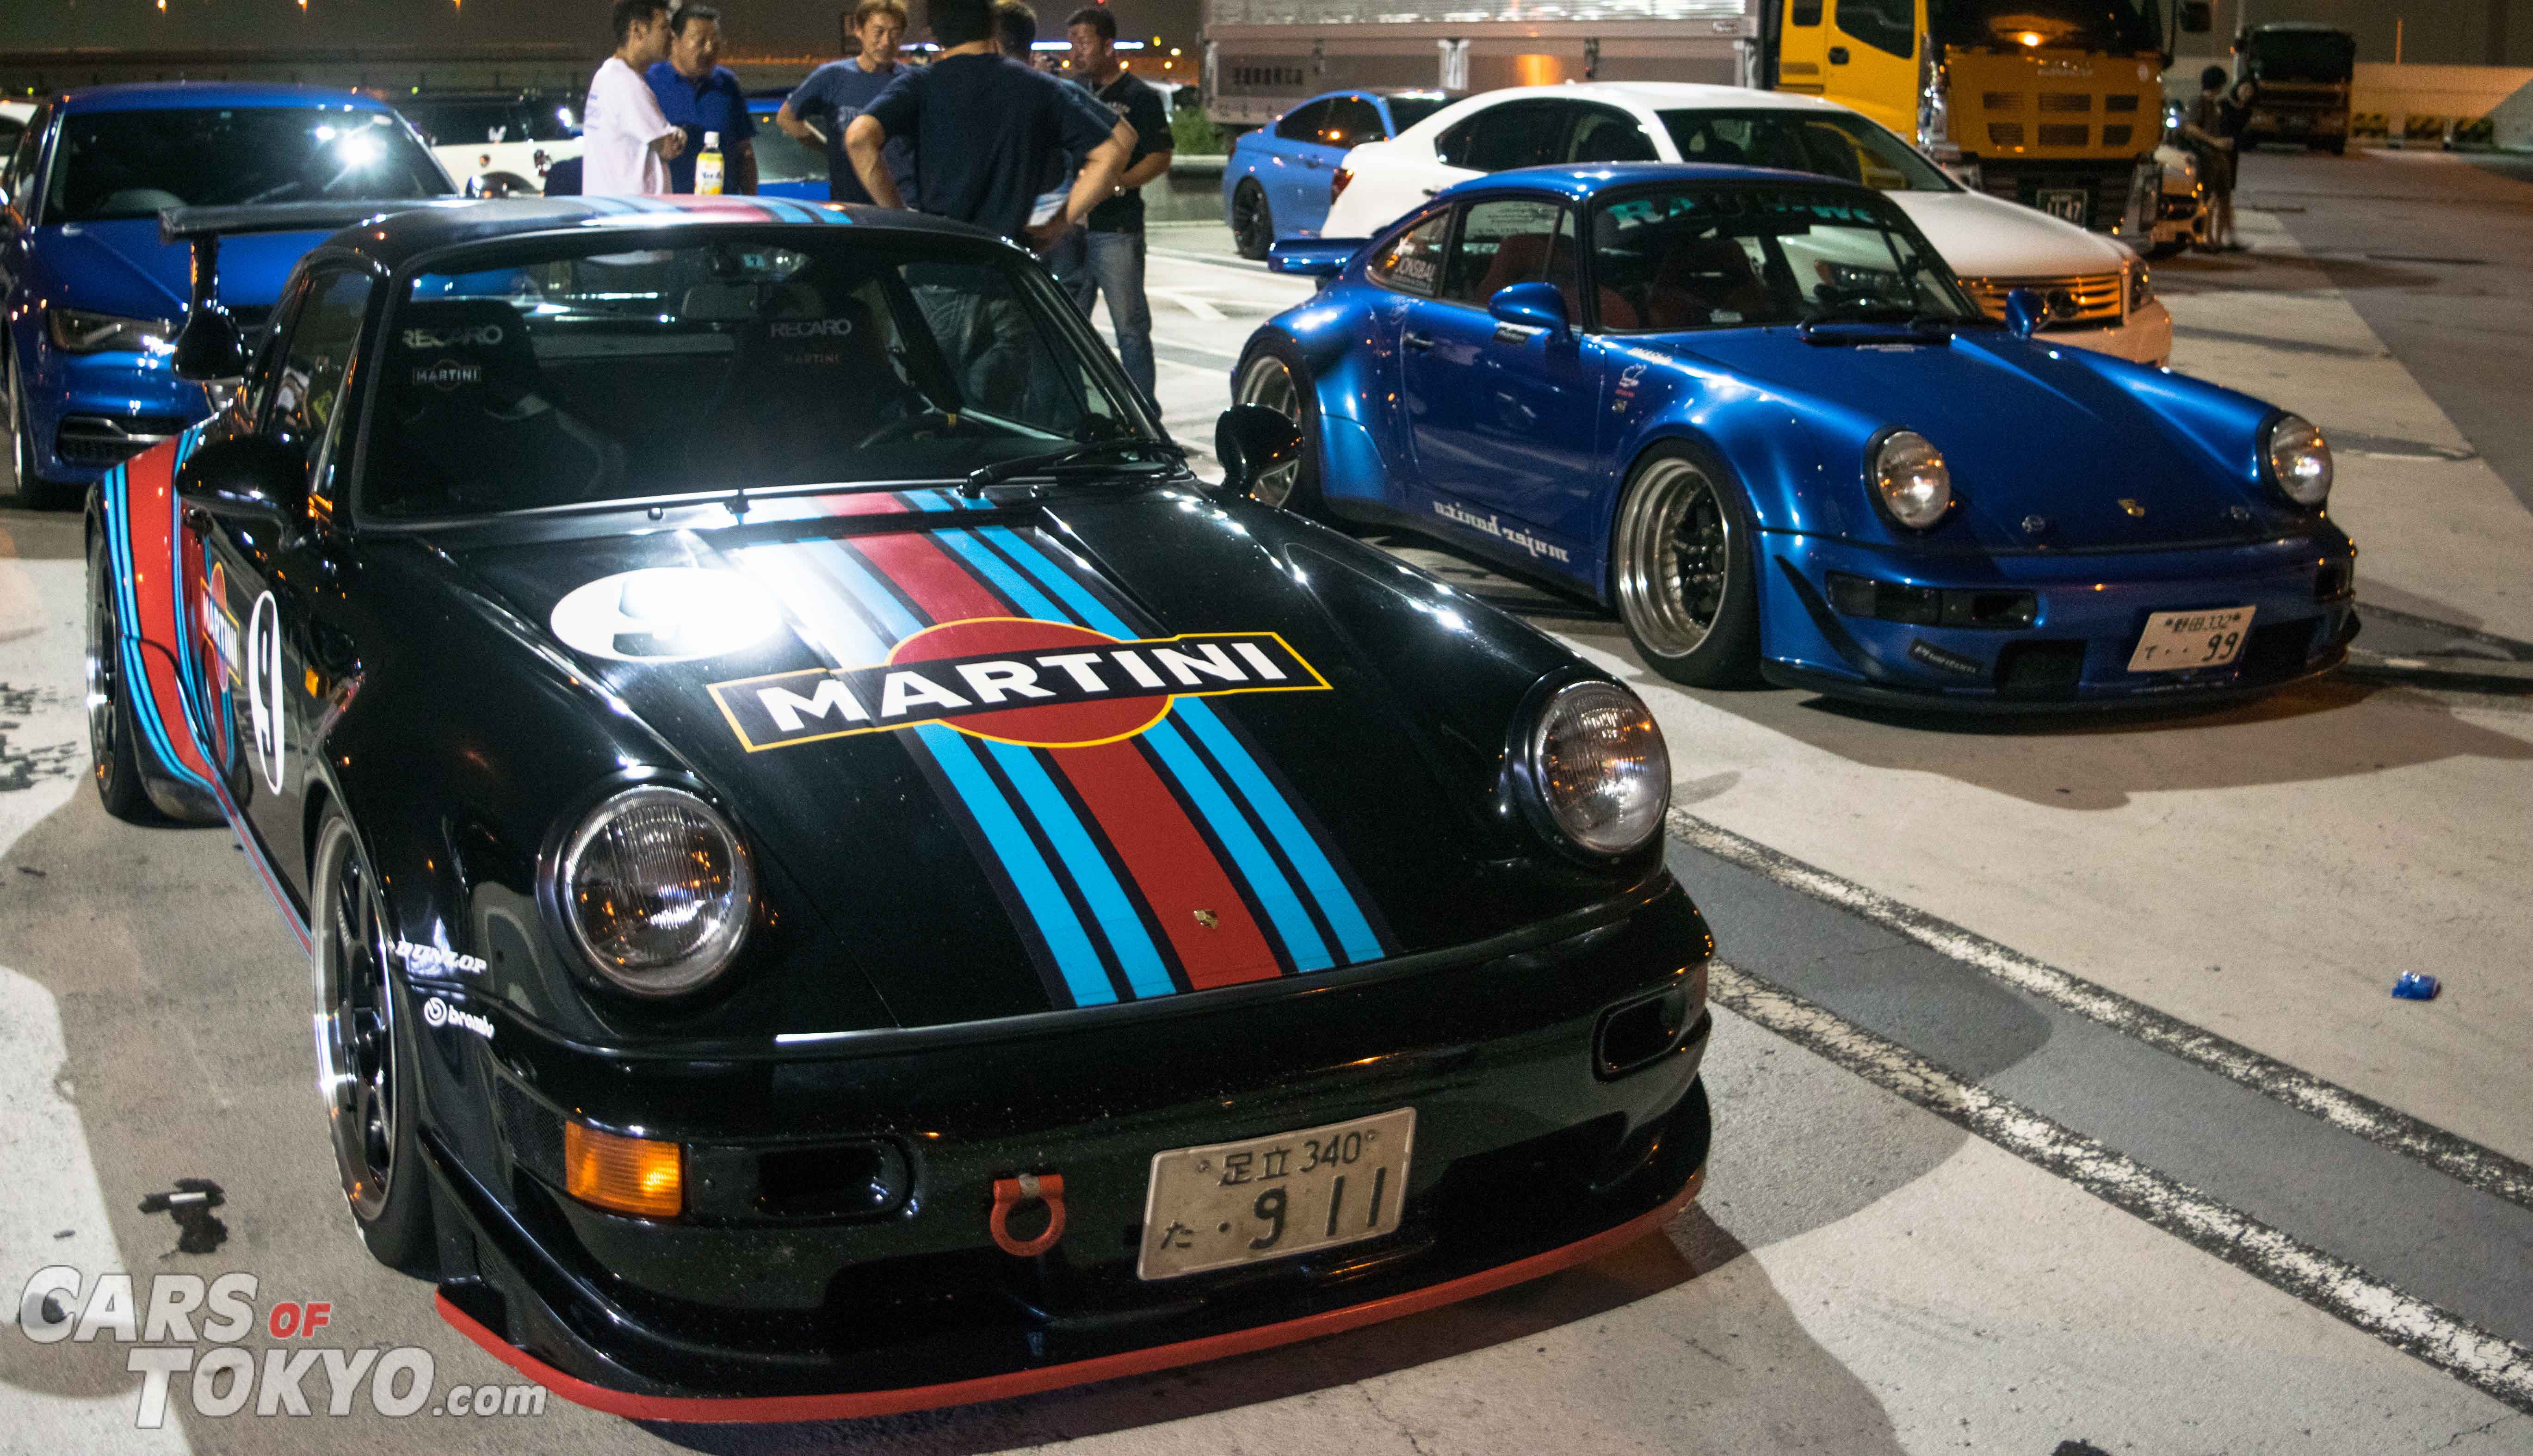 Cars of Tokyo Tatsumi 911 RWB & Martini